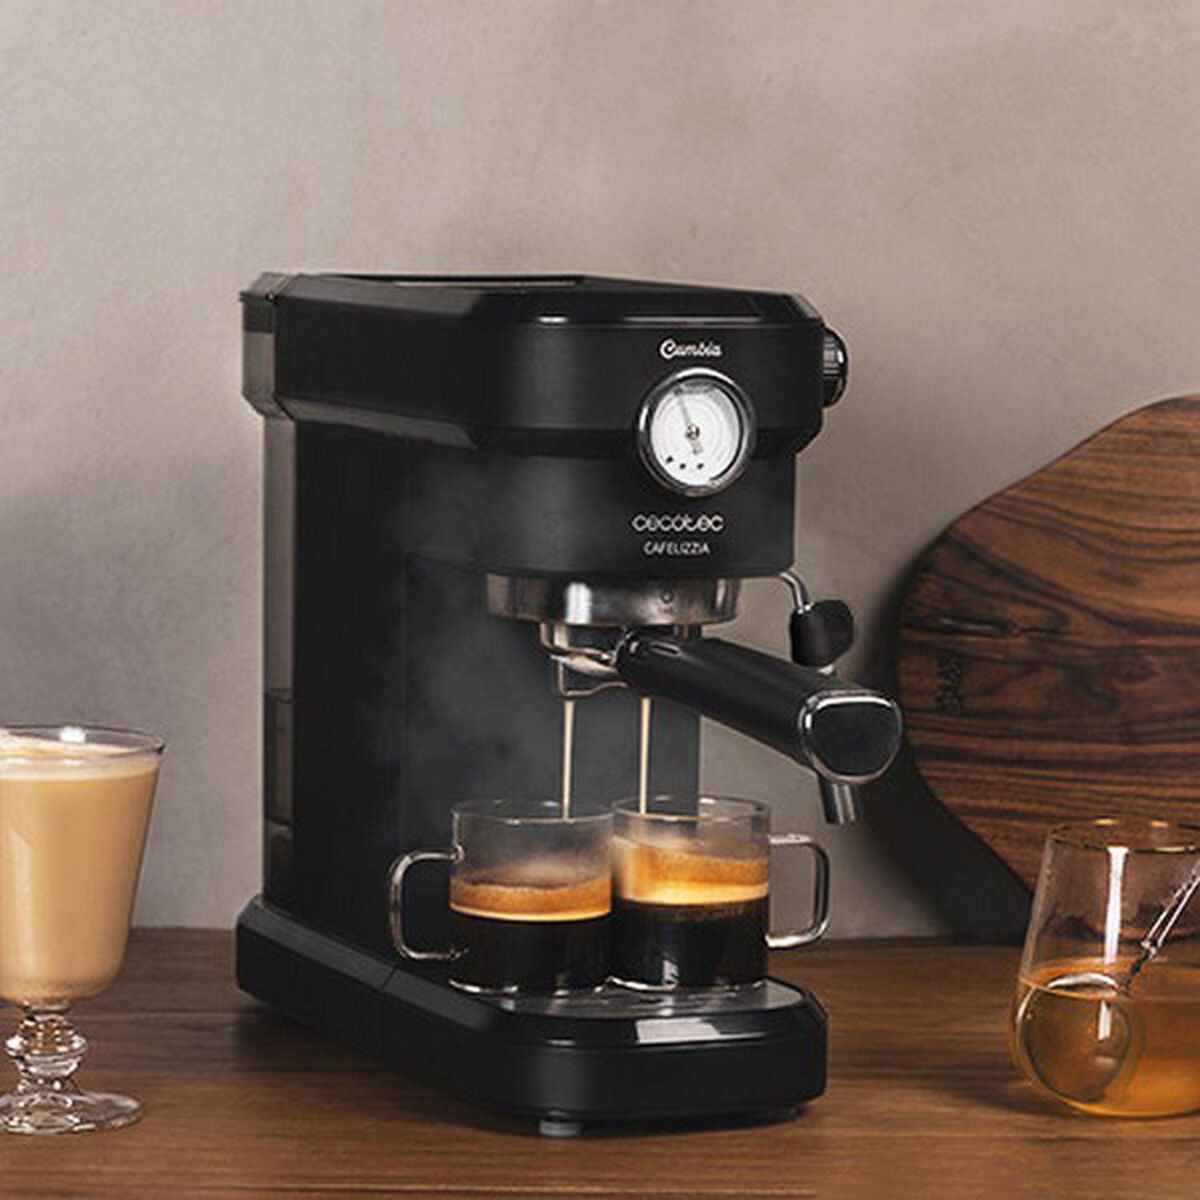 Express Manual Coffee Machine Cecotec Cafelizzia 790 Black Pro 1,2 L